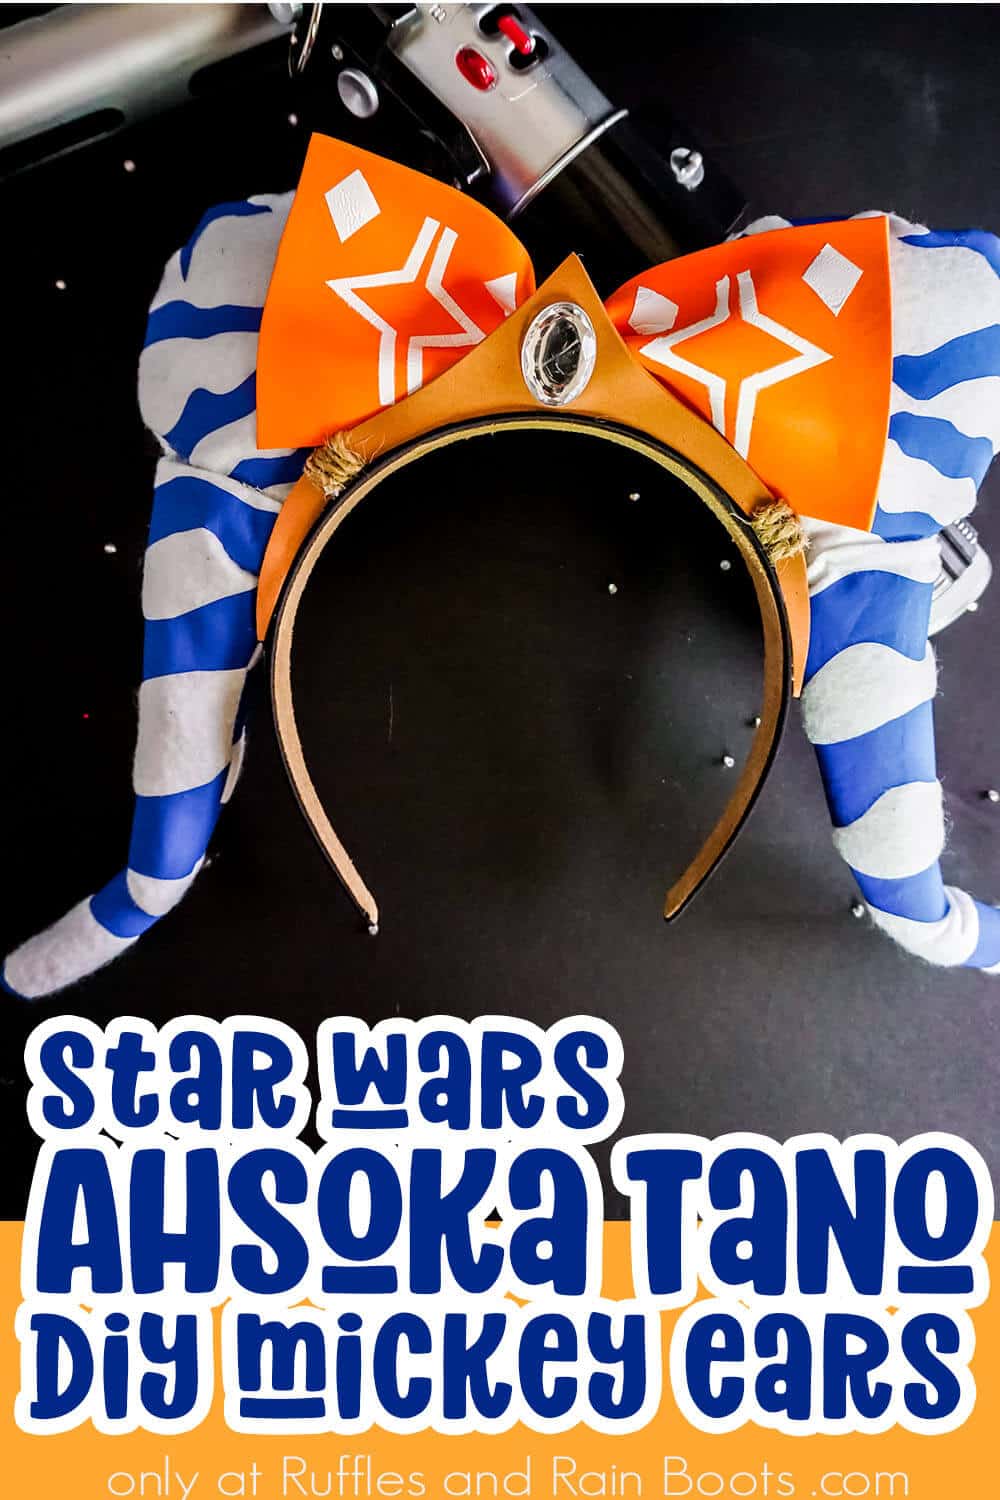 closeup of diy mickey ears for star wars galaxys edge with text which reads star wars ahsoka tano diy mickey ears